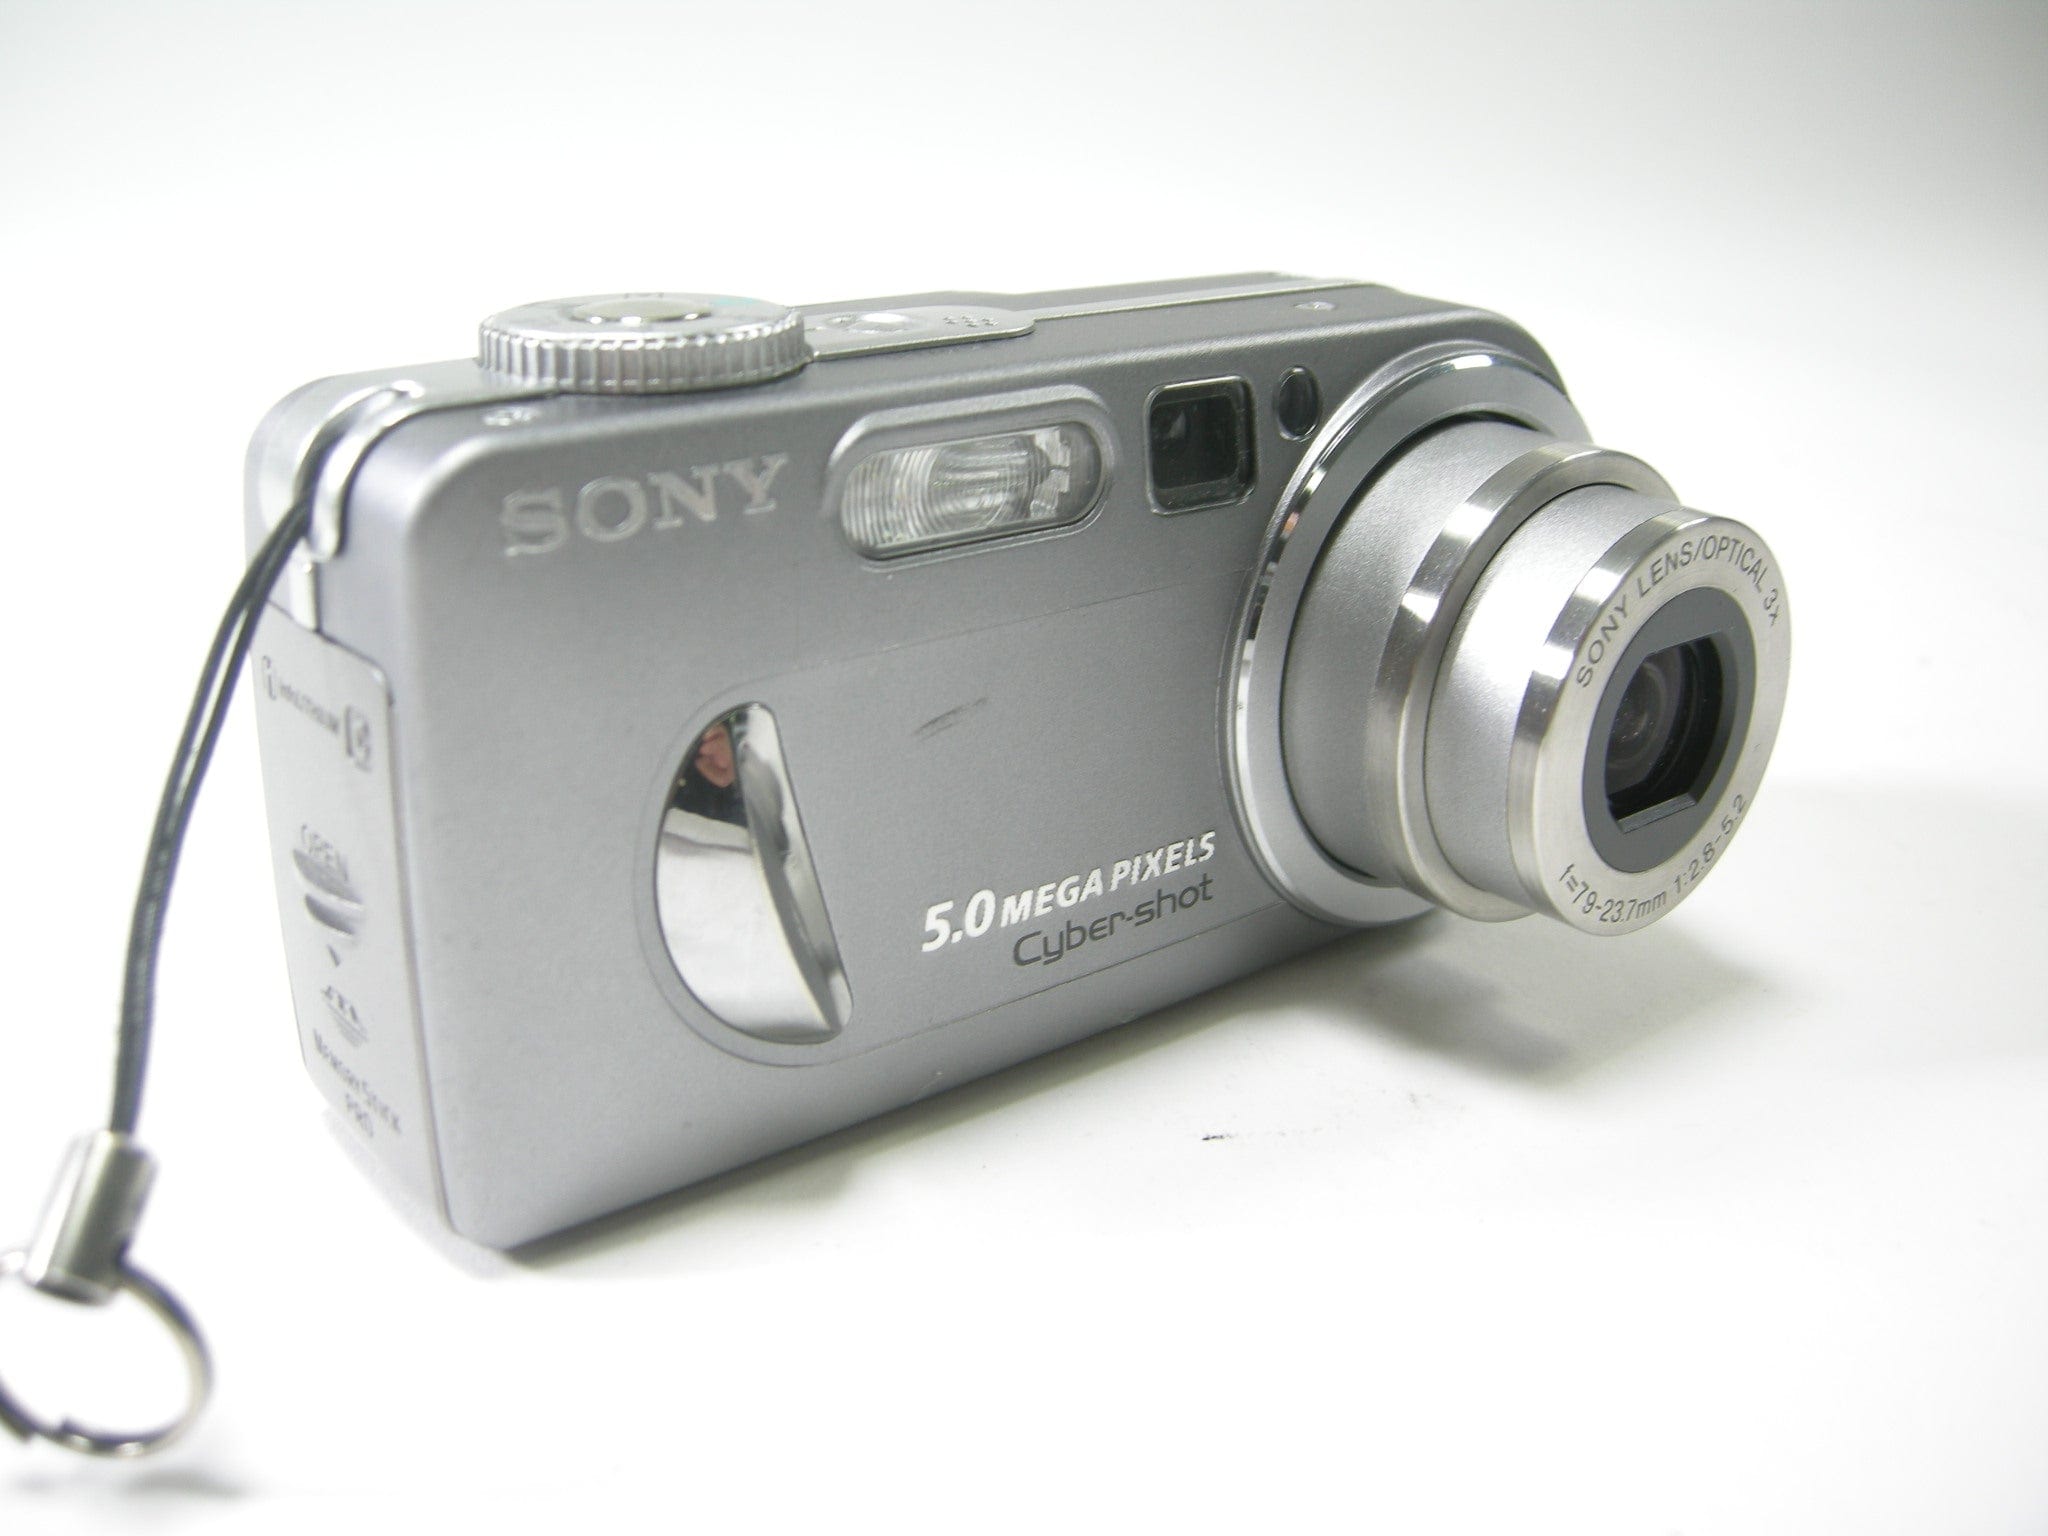 Sony Cyber-shot DSC-P10 Repair - iFixit